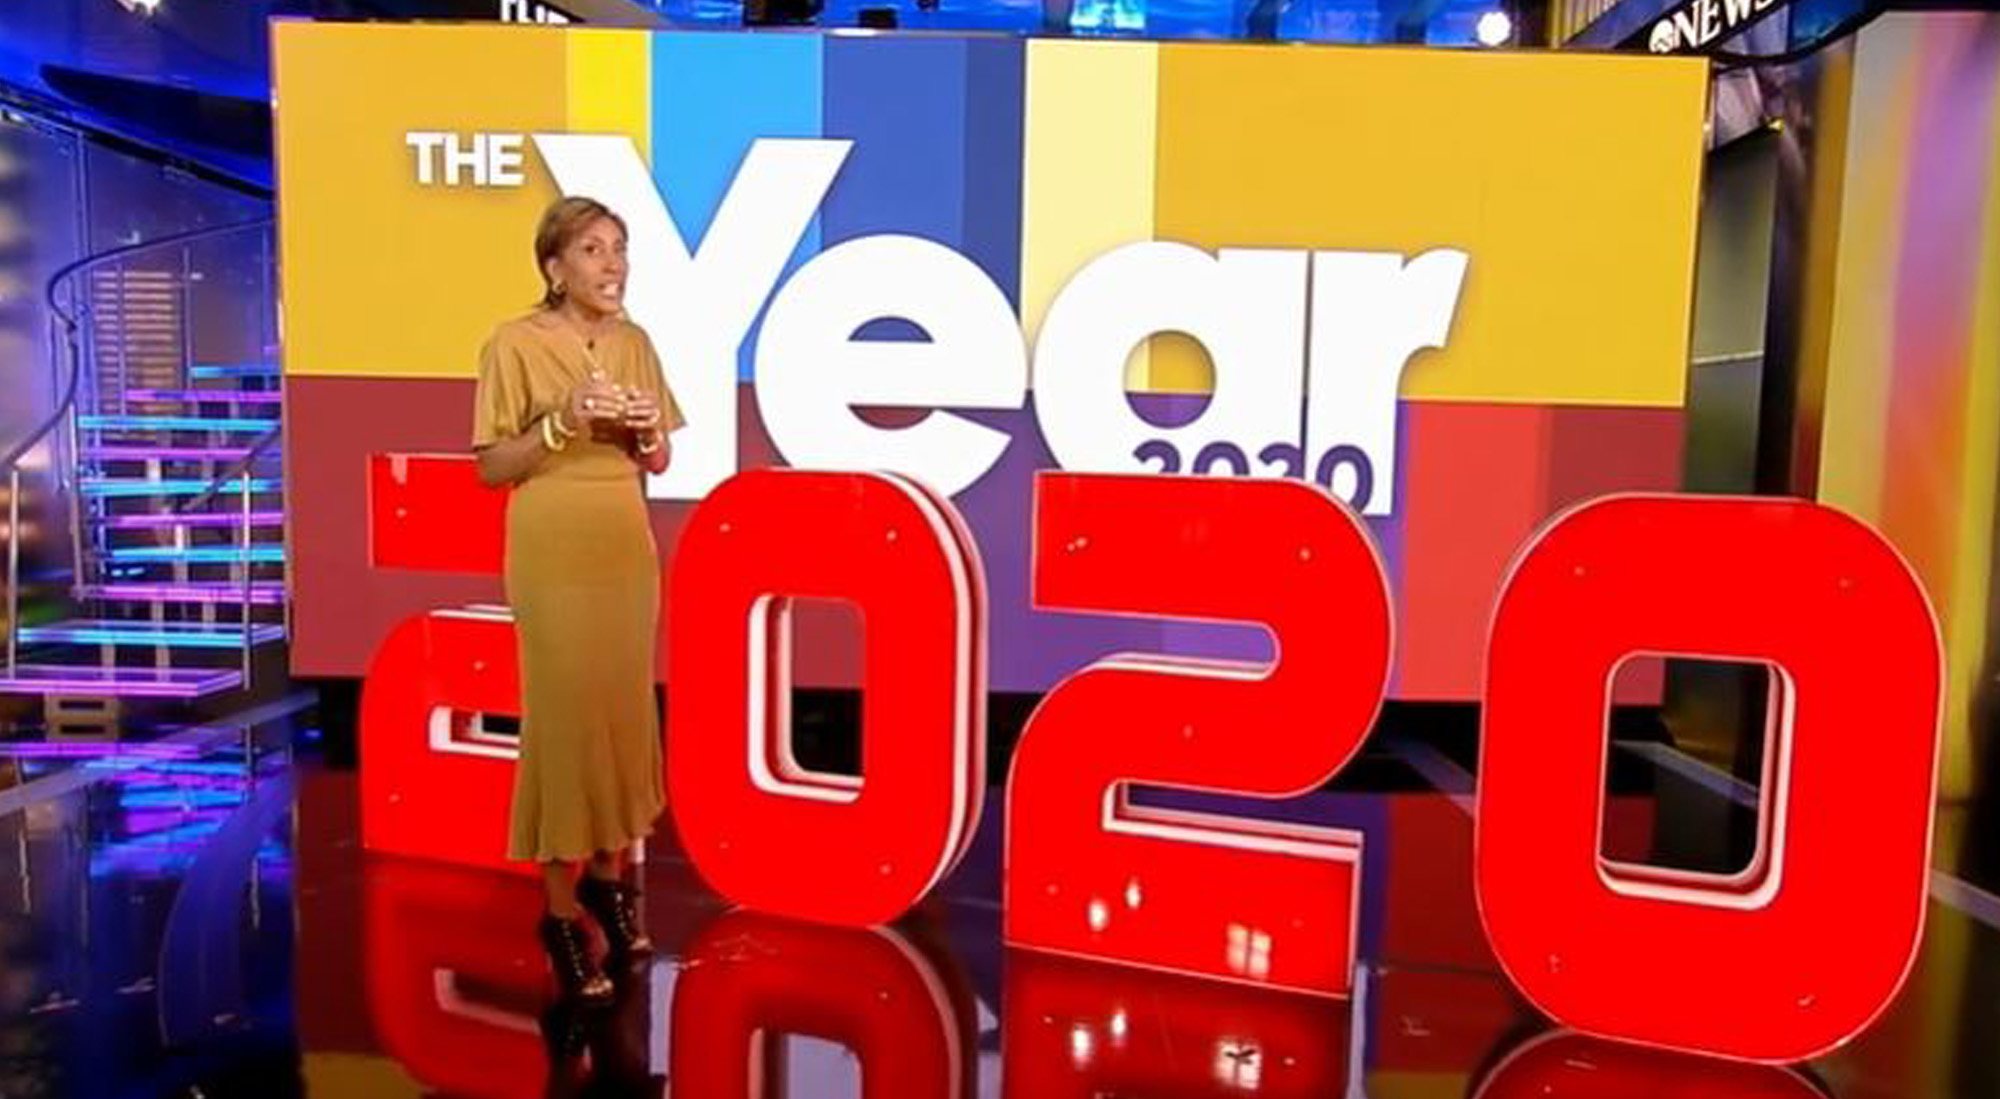 Robin Roberts presentó el especial 'The Year: 2020' en ABC